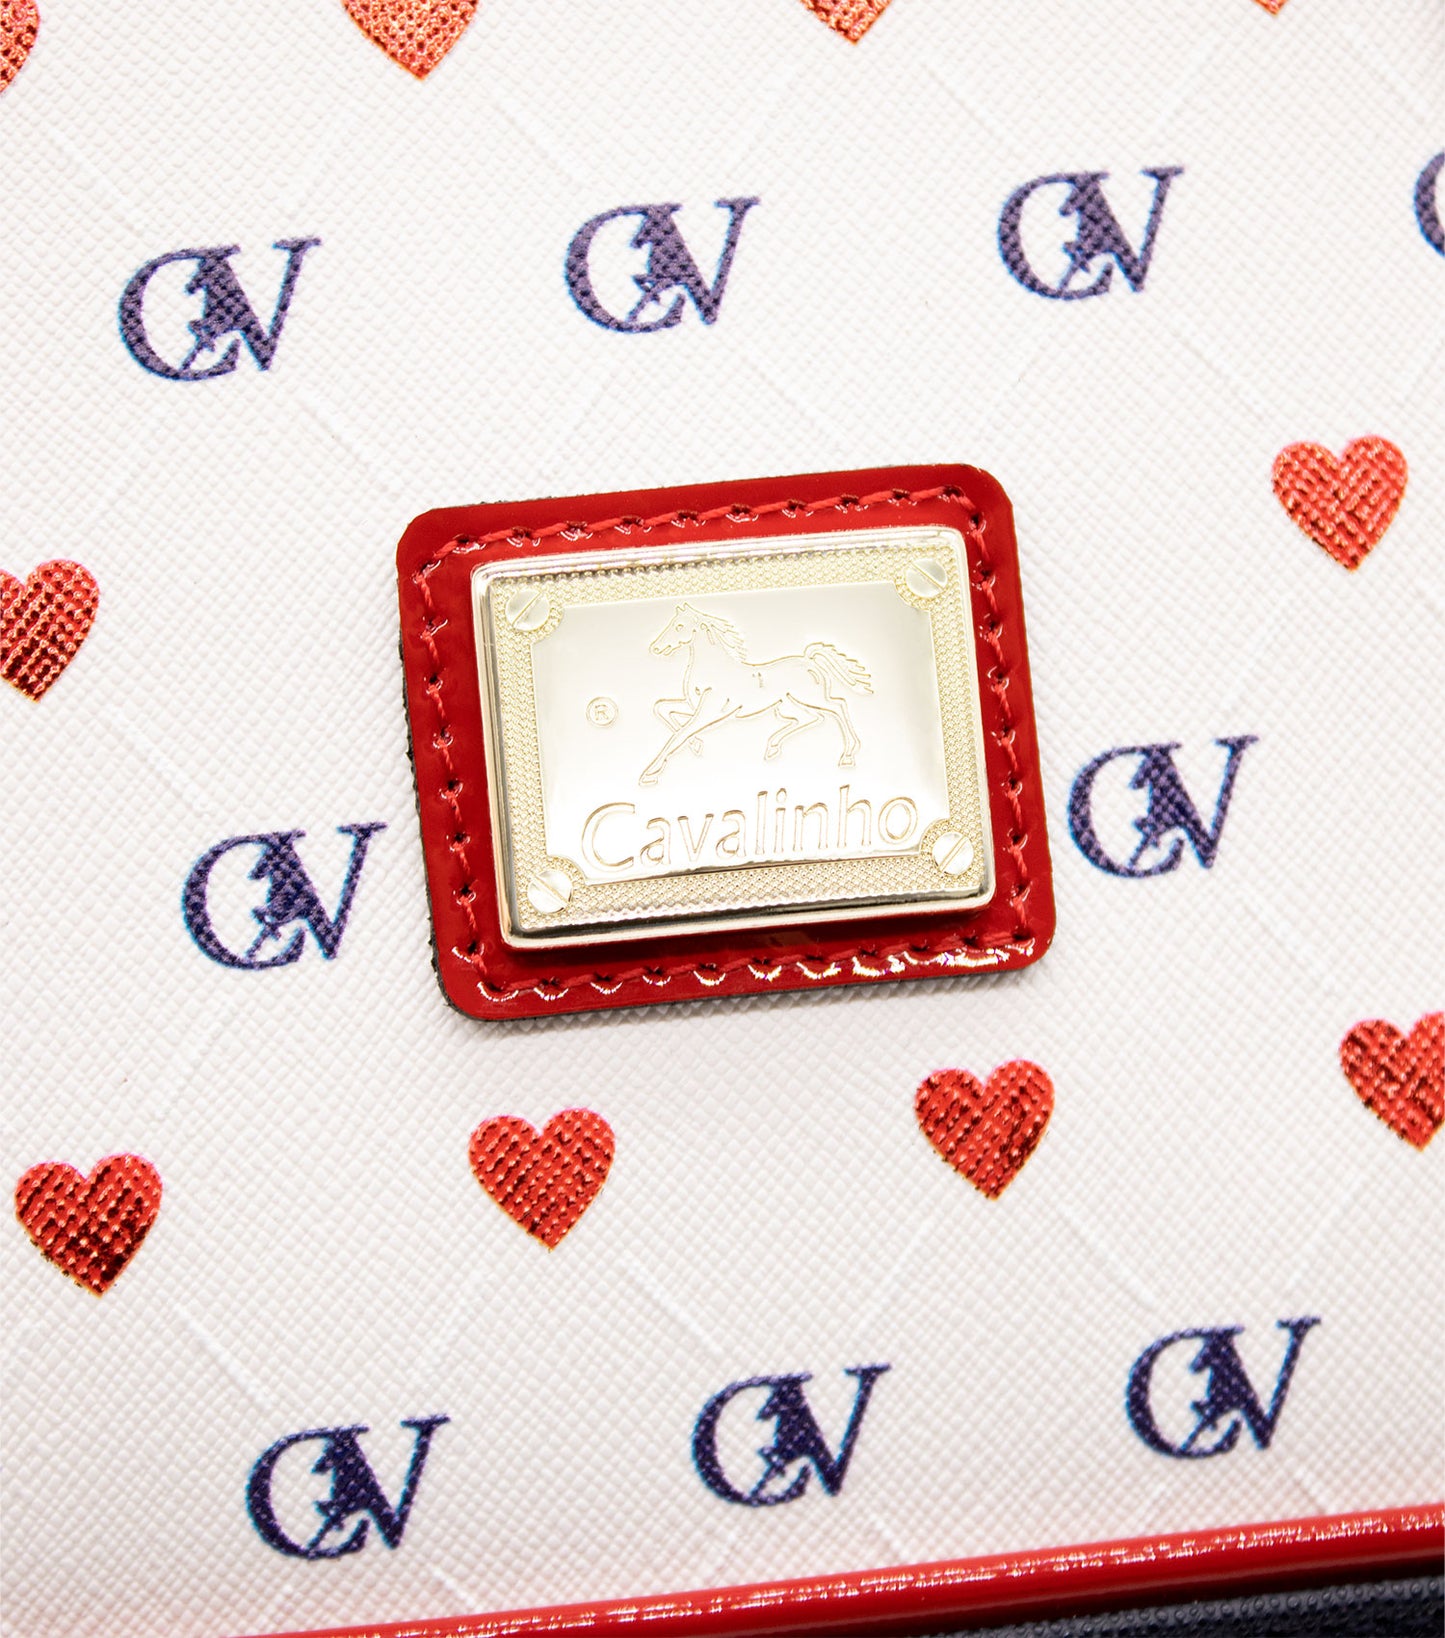 Cavalinho Love Yourself Mini Handbag - Navy / White / Red - 18440243.22_P04